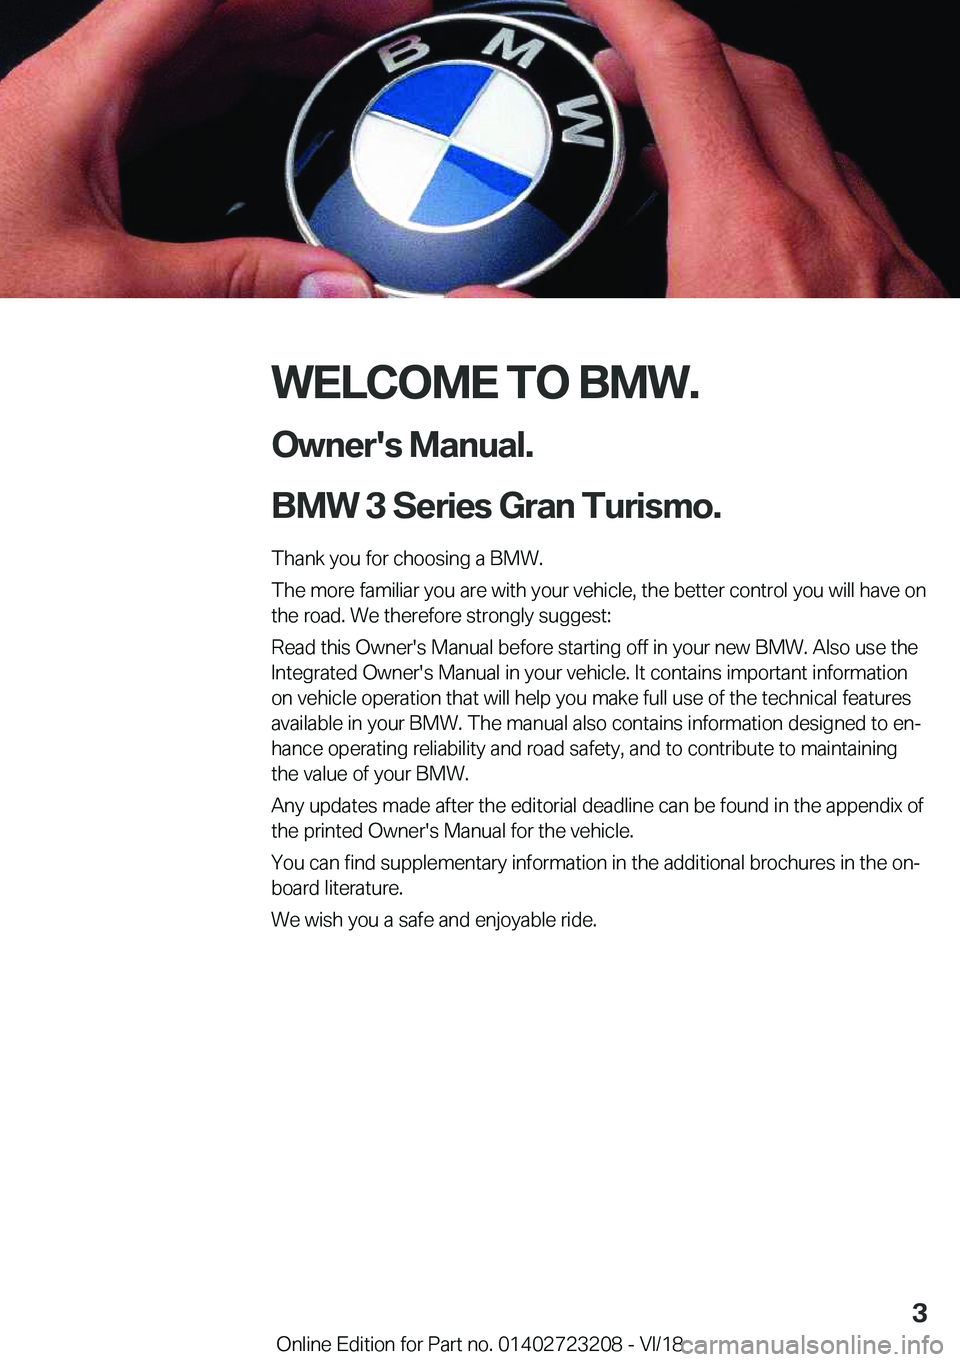 BMW 3 SERIES GRAN TURISMO 2019  Owners Manual �W�E�L�C�O�M�E��T�O��B�M�W�.�O�w�n�e�r�'�s��M�a�n�u�a�l�.
�B�M�W��3��S�e�r�i�e�s��G�r�a�n��T�u�r�i�s�m�o�.
�T�h�a�n�k��y�o�u��f�o�r��c�h�o�o�s�i�n�g��a��B�M�W�.
�T�h�e��m�o�r�e��f�a�